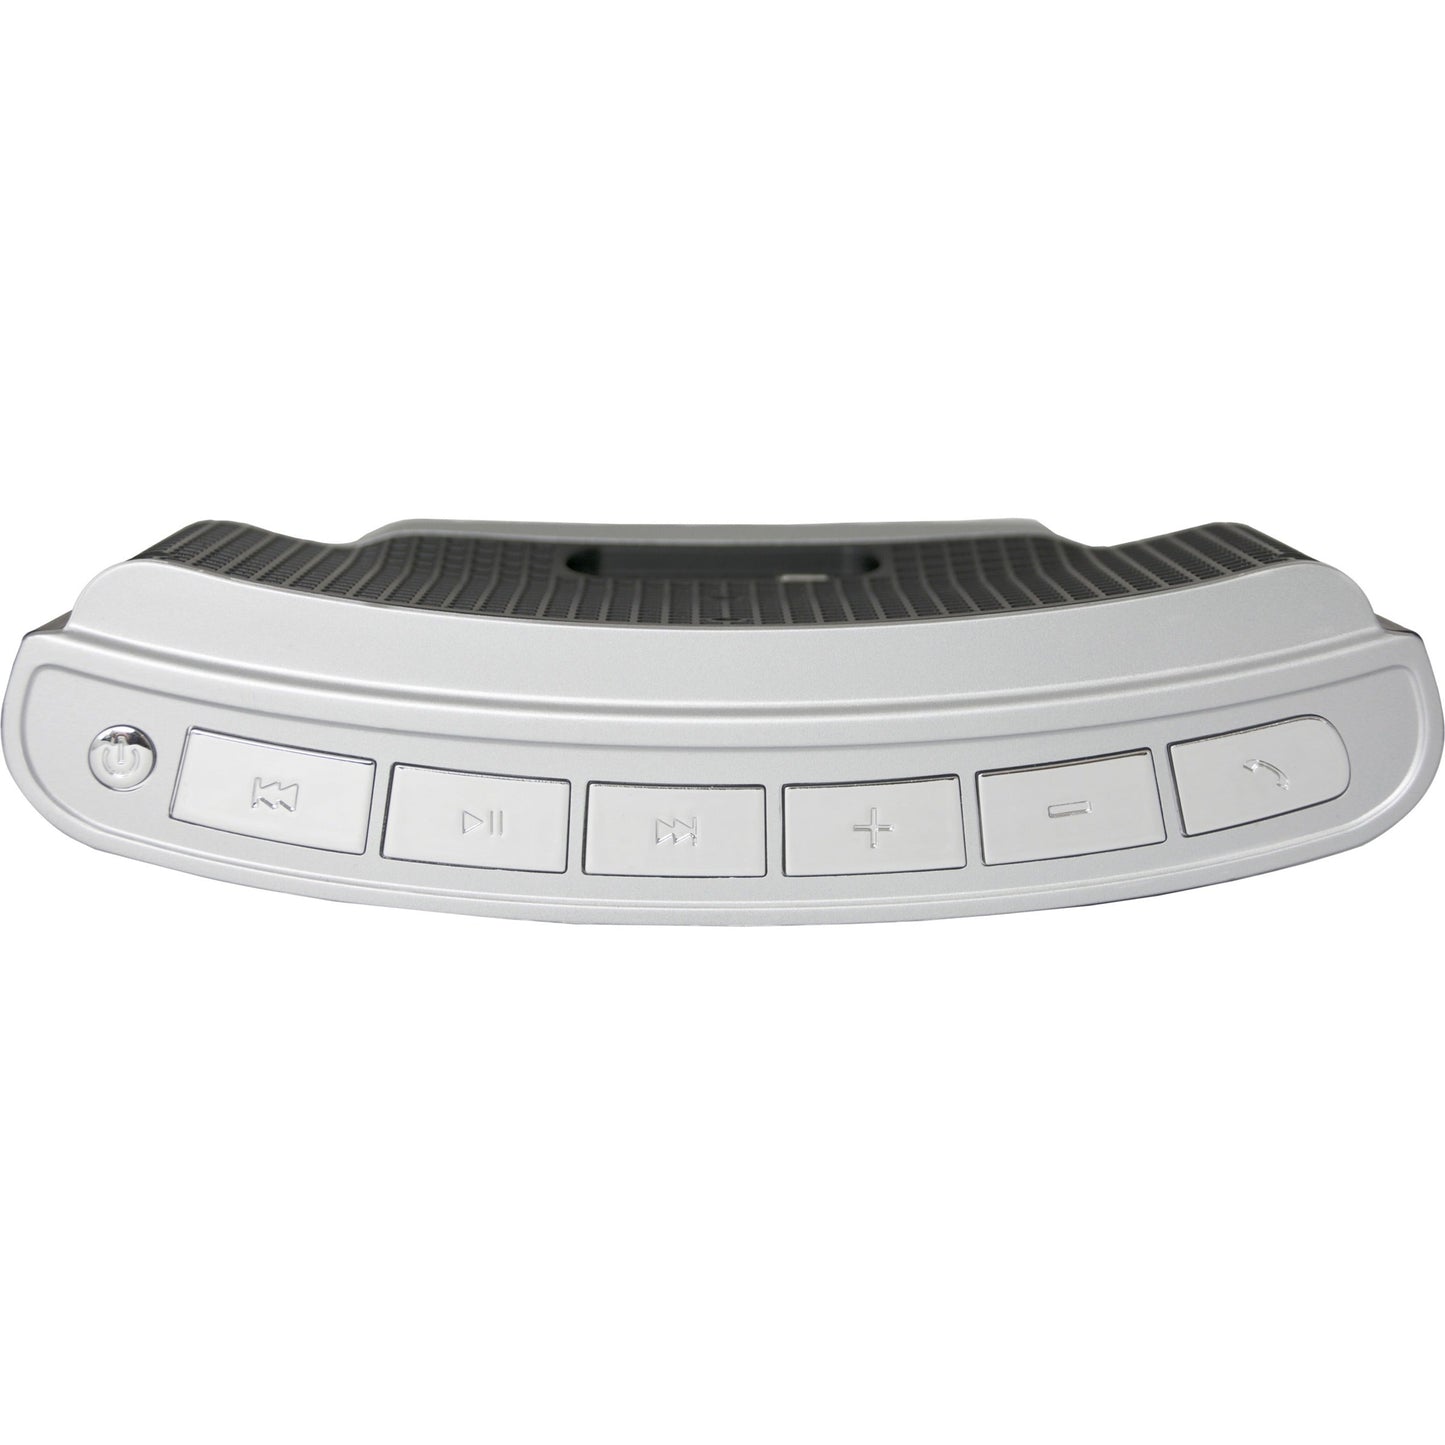 Spracht Blunote2.0 Portable Bluetooth Speaker System - 10 W RMS - Silver